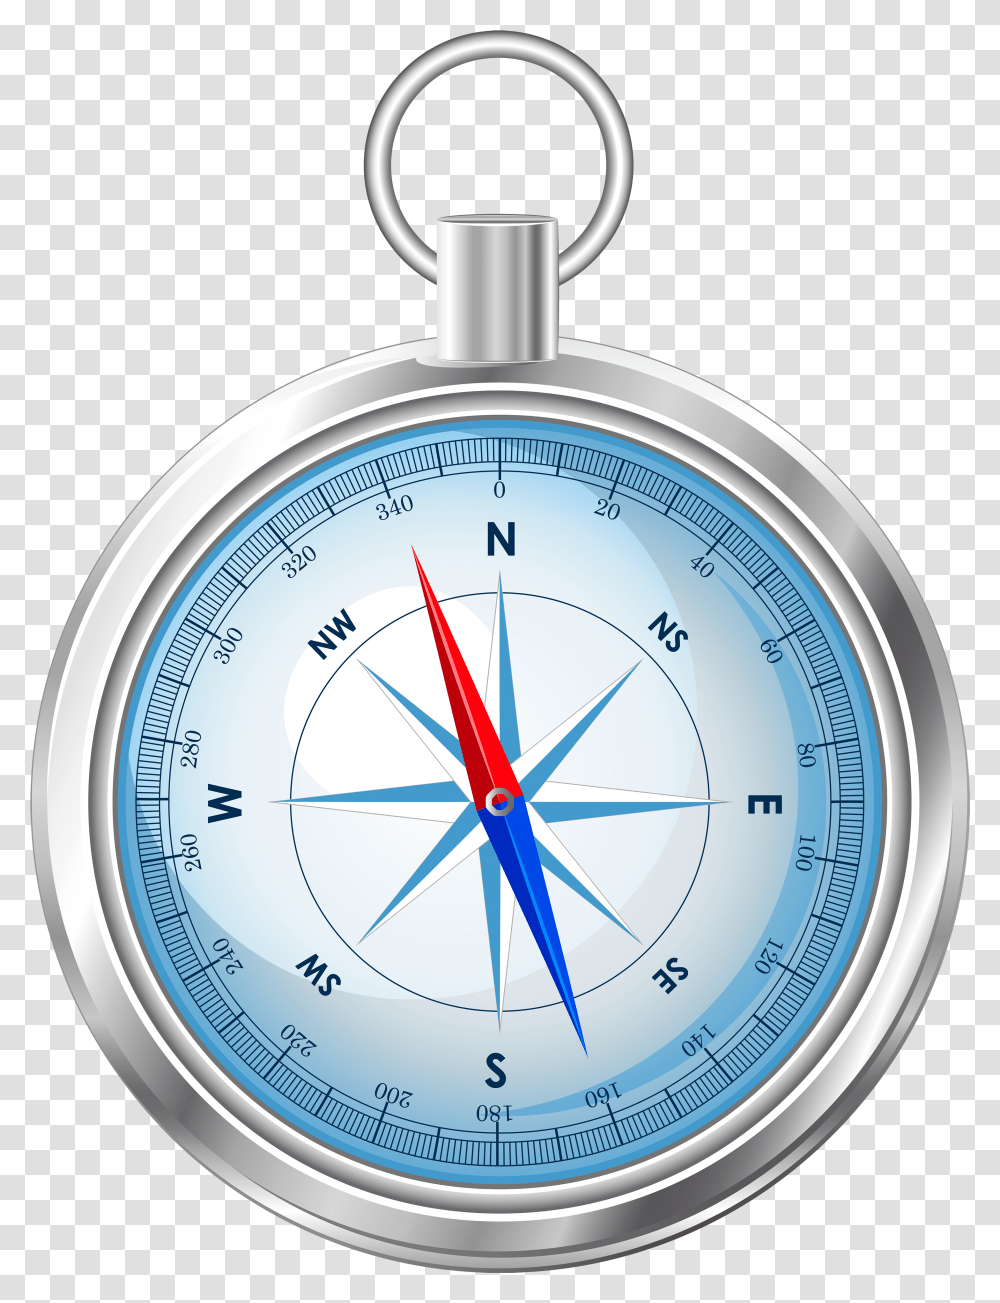 Compass Portable Network Graphics, Clock Tower, Architecture, Building, Wristwatch Transparent Png